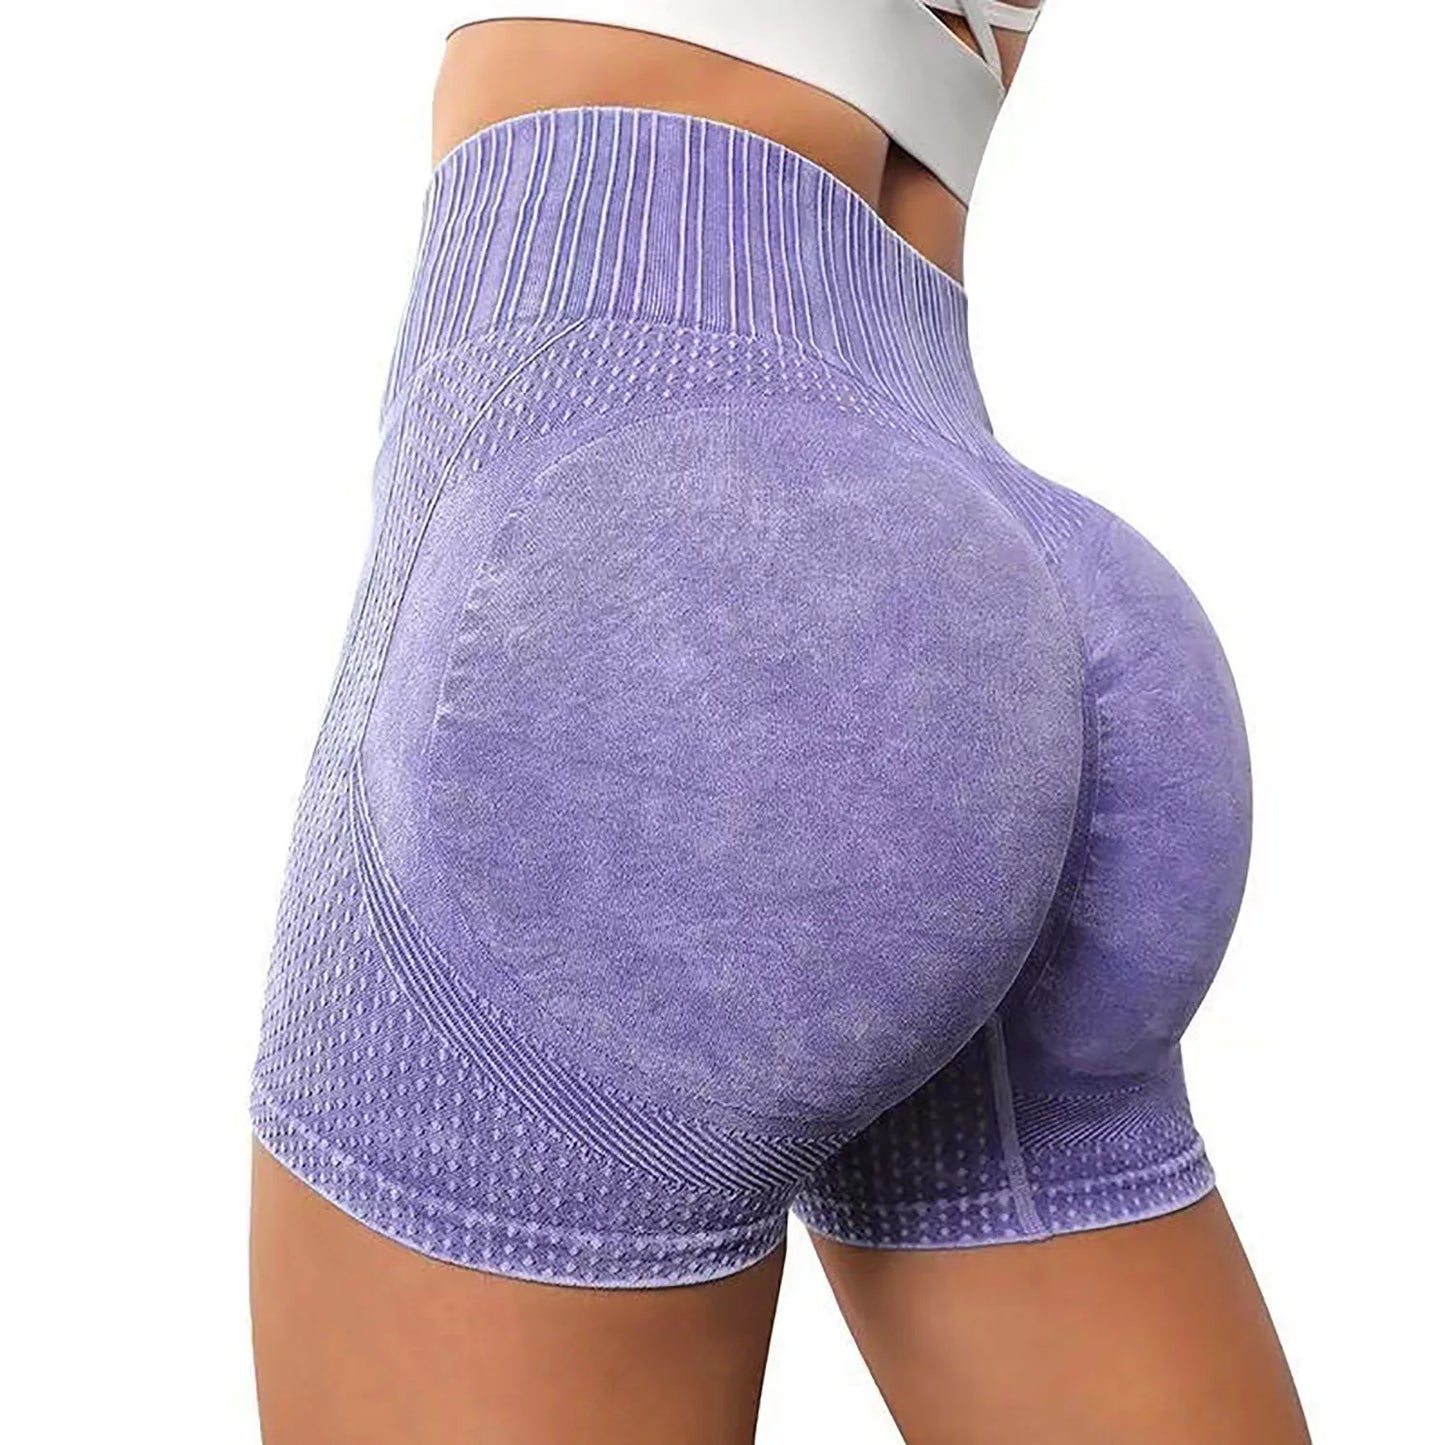 HALEY - Butt push up shorts